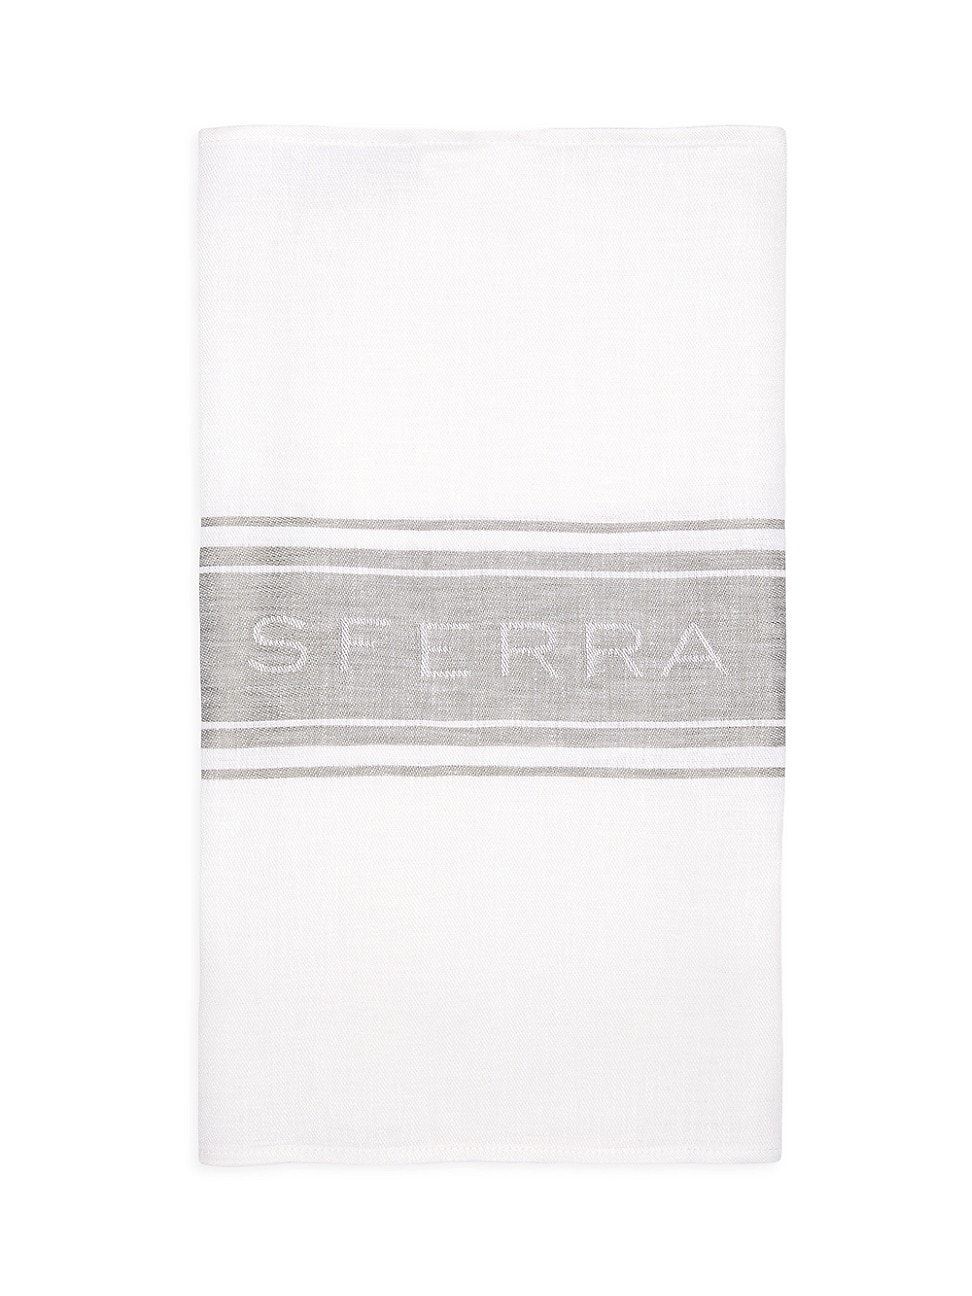 Parma 2-Piece Kitchen Towel Set - White Grey | Saks Fifth Avenue